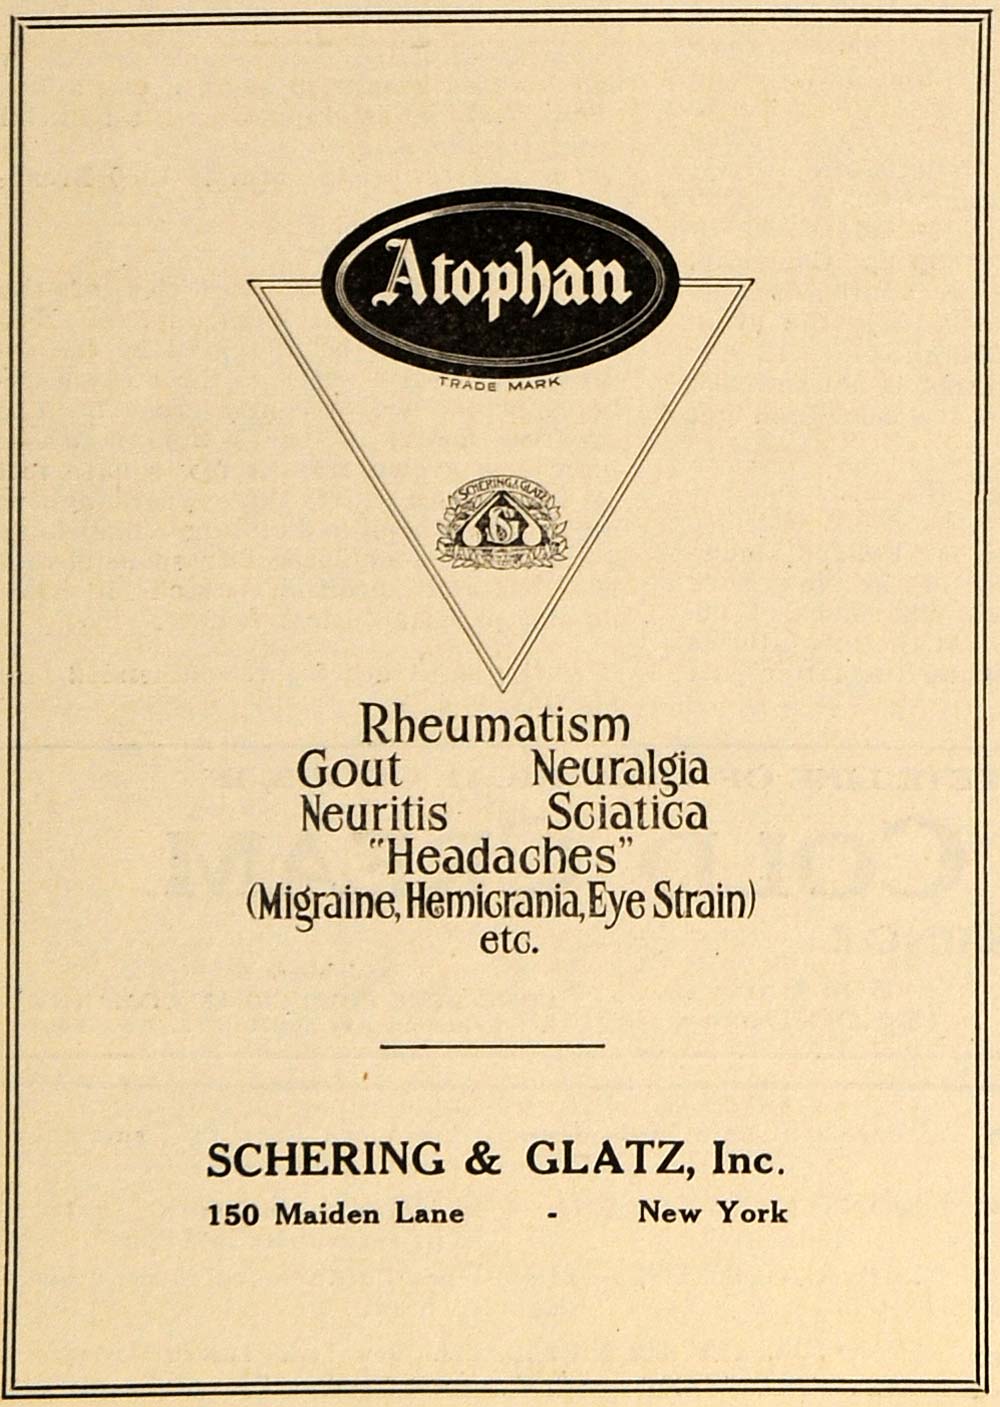 1921 Ad Schering Glatz Atophan Gout Headache Neuritis 150 Maiden Lane NY DRC1